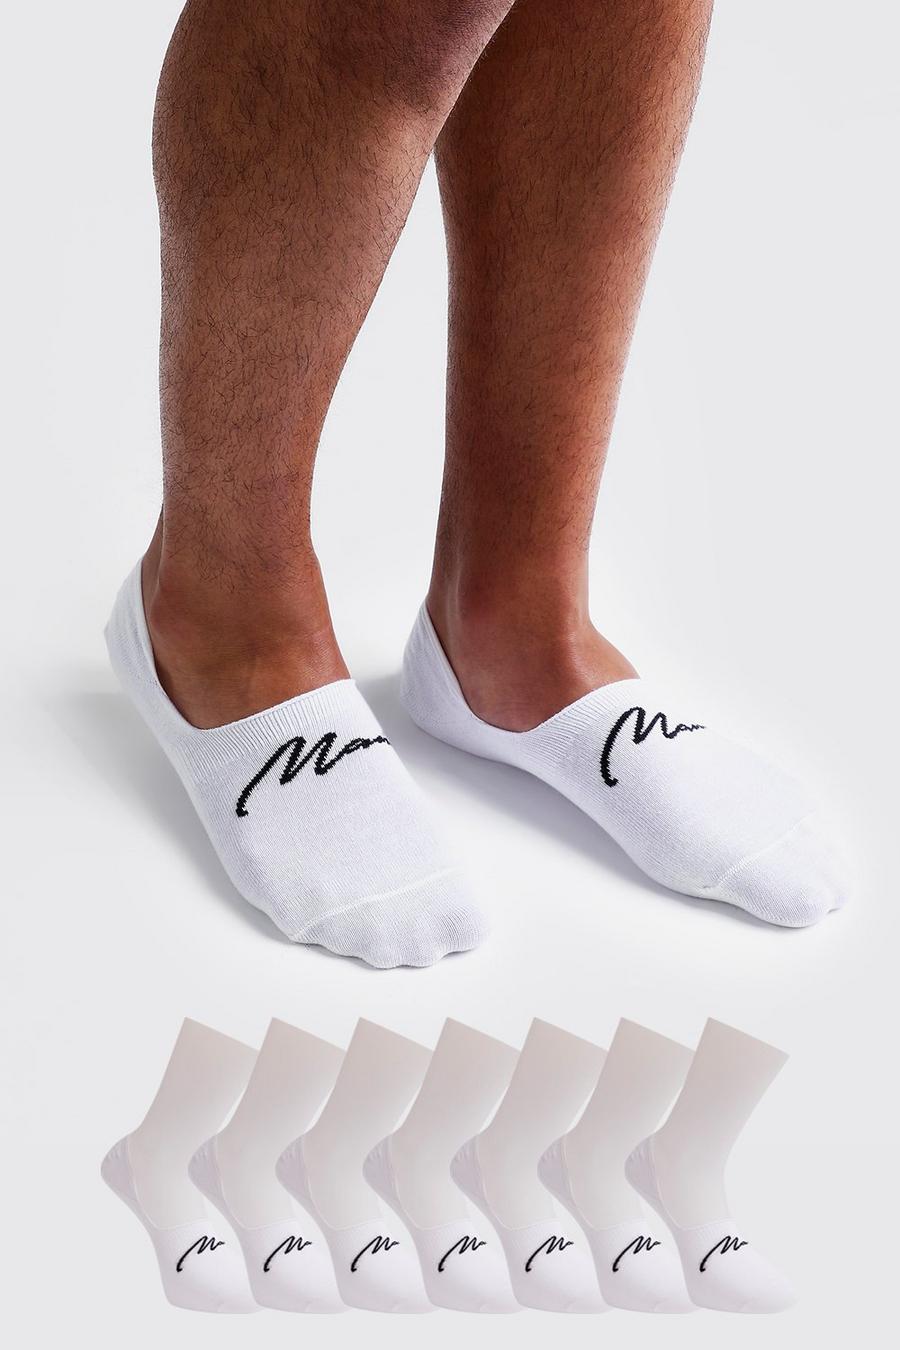 7er-Pack unsichtbare Man Signature Socken, Weiß blanc